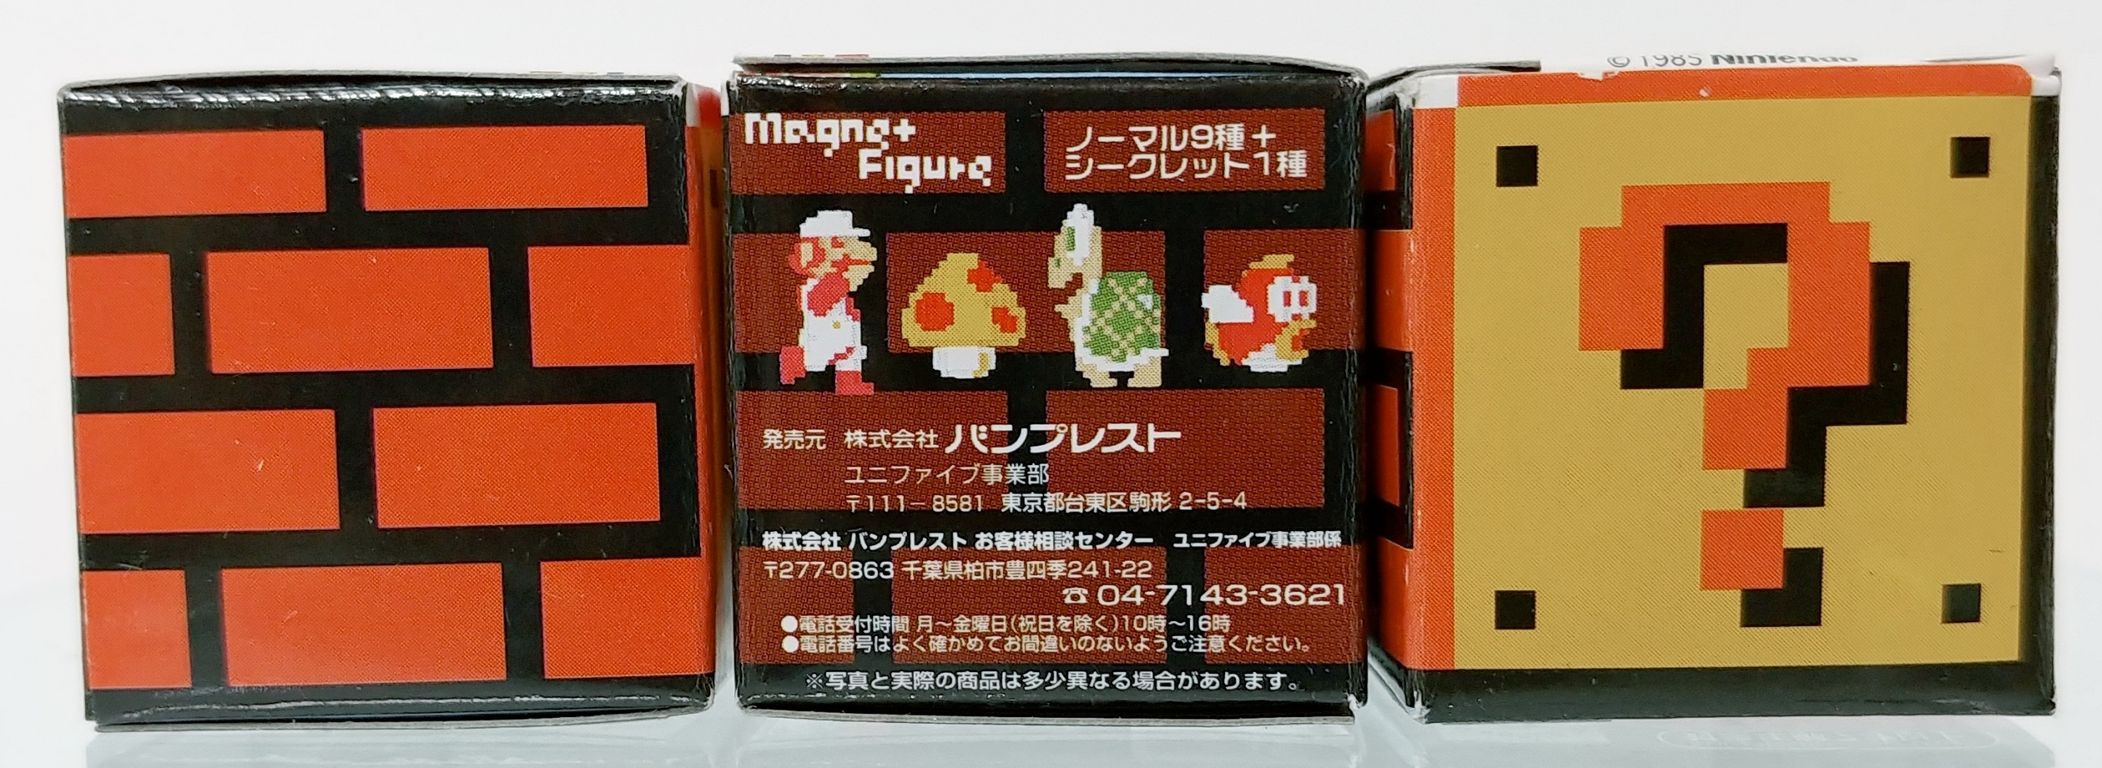 Nintendo スーパーマリオブラザーズ マグネットフィギュア